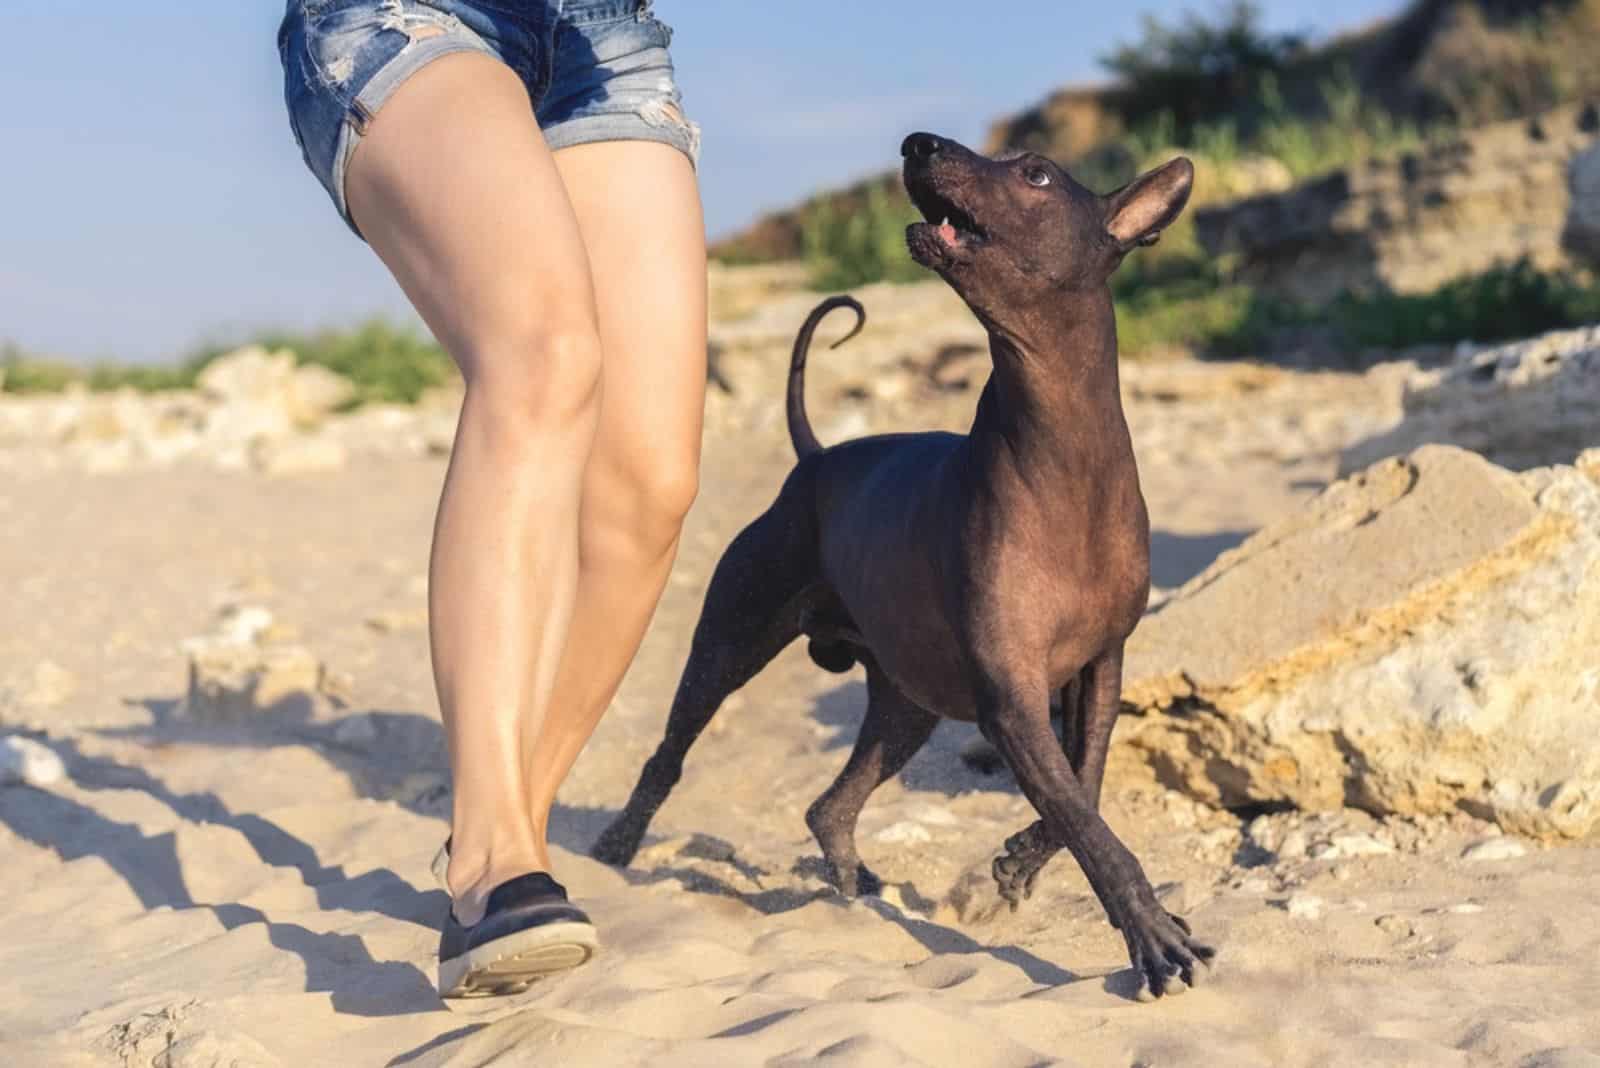 girl walking (play) with her dog xoloitzcuintli on sand